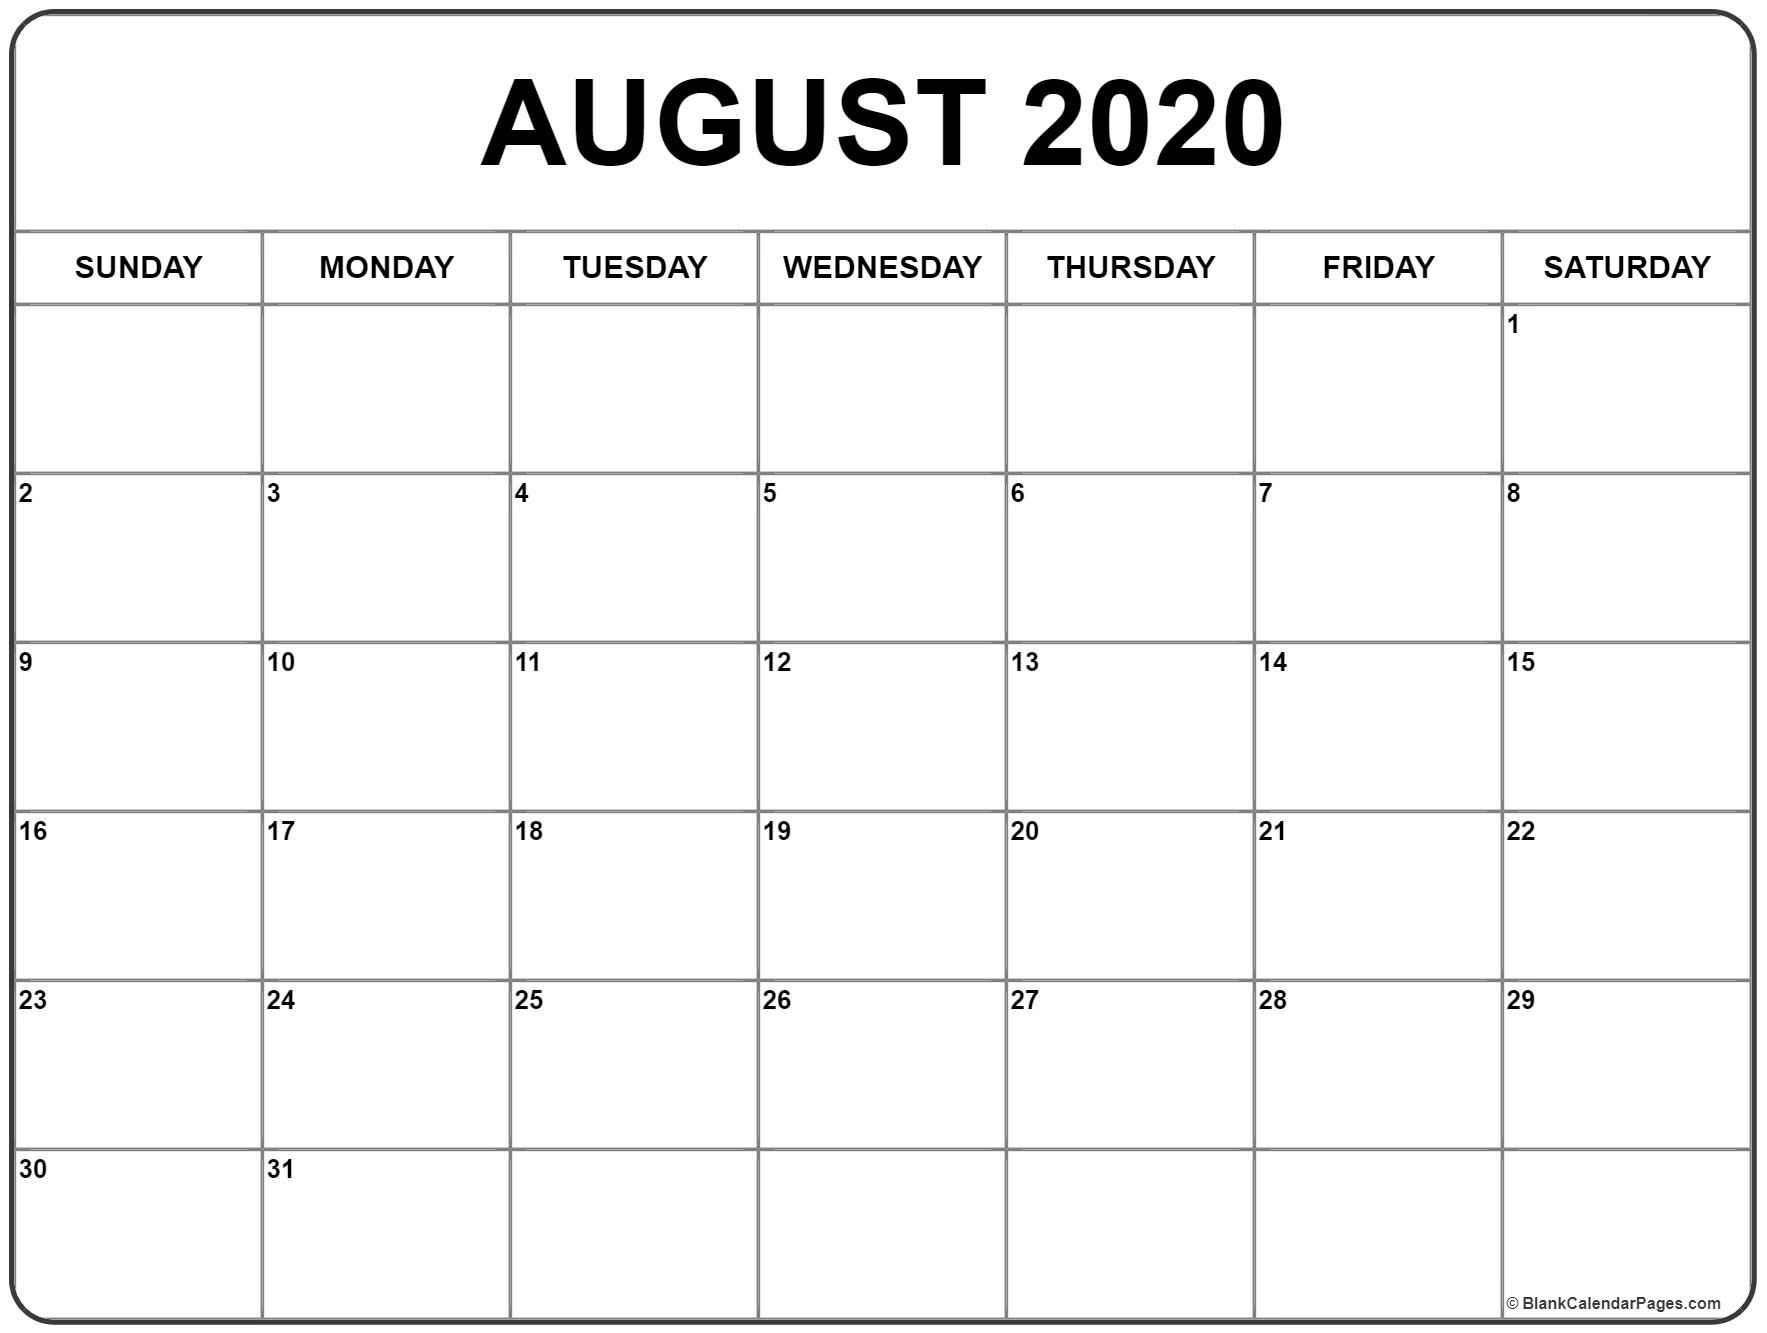 August 2020 Calendar . August 2020 Calendar Printableaugust